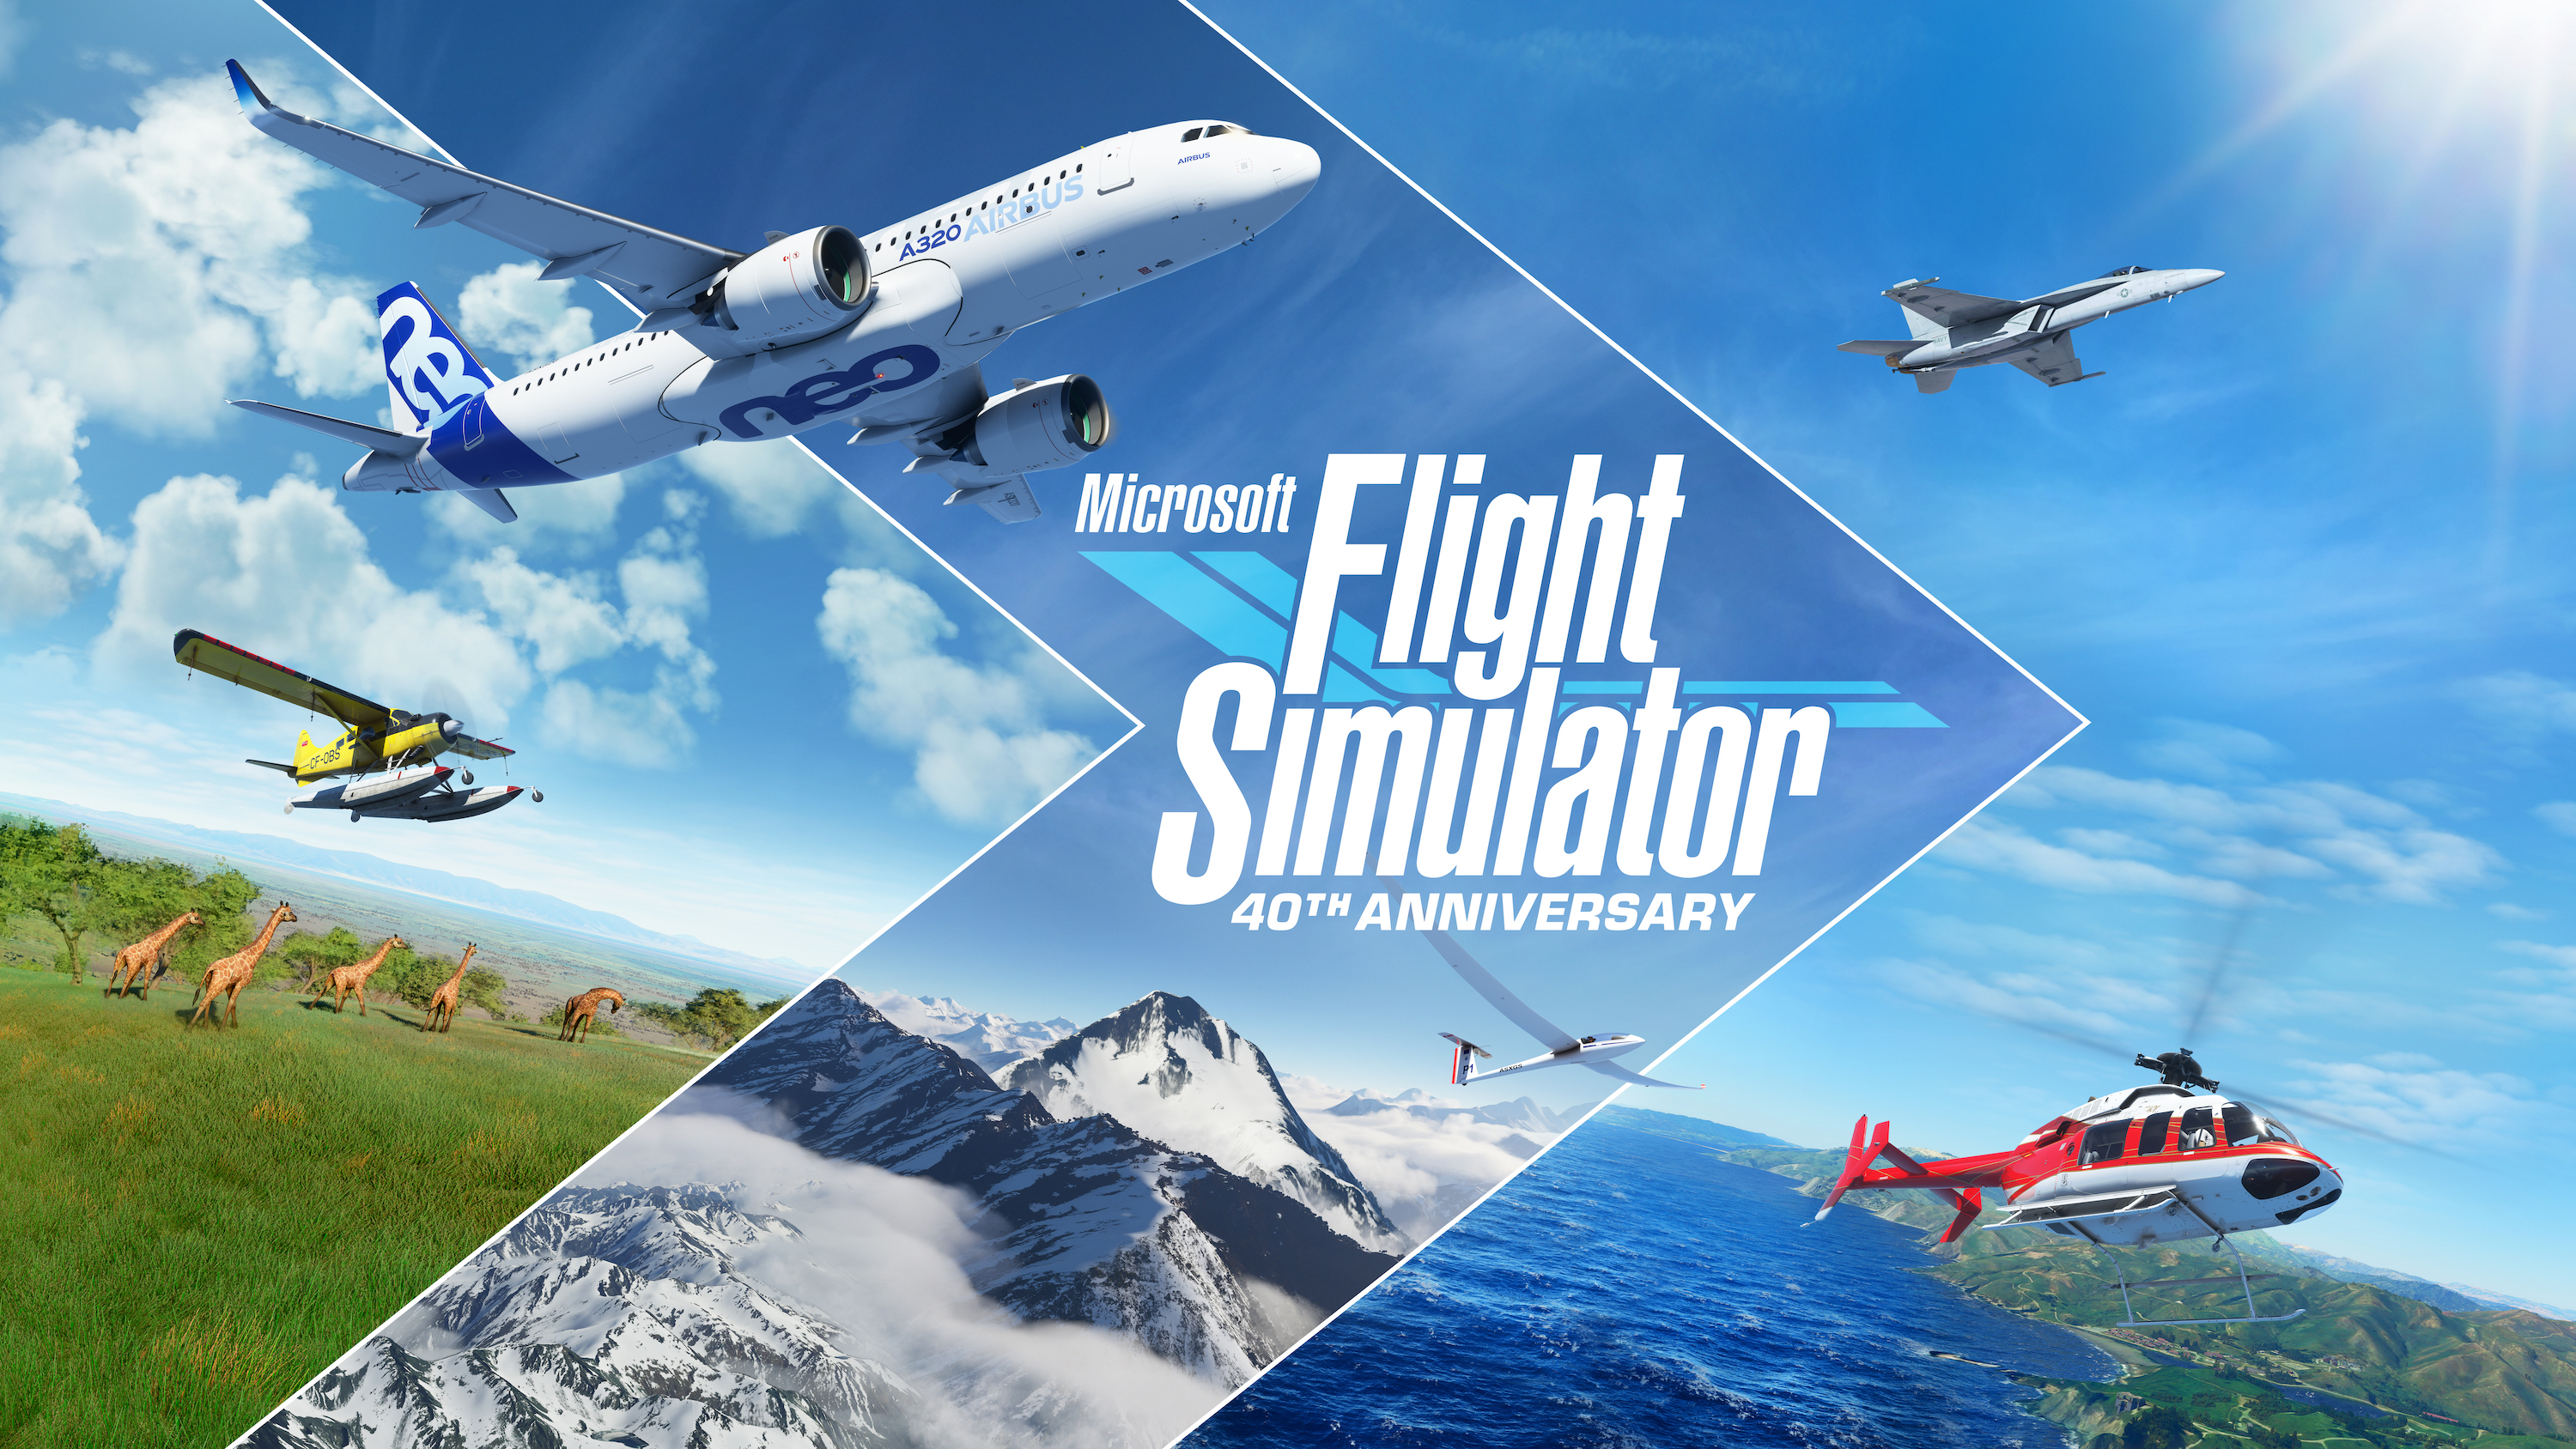 Microsoft Announces Flight Simulator 2024